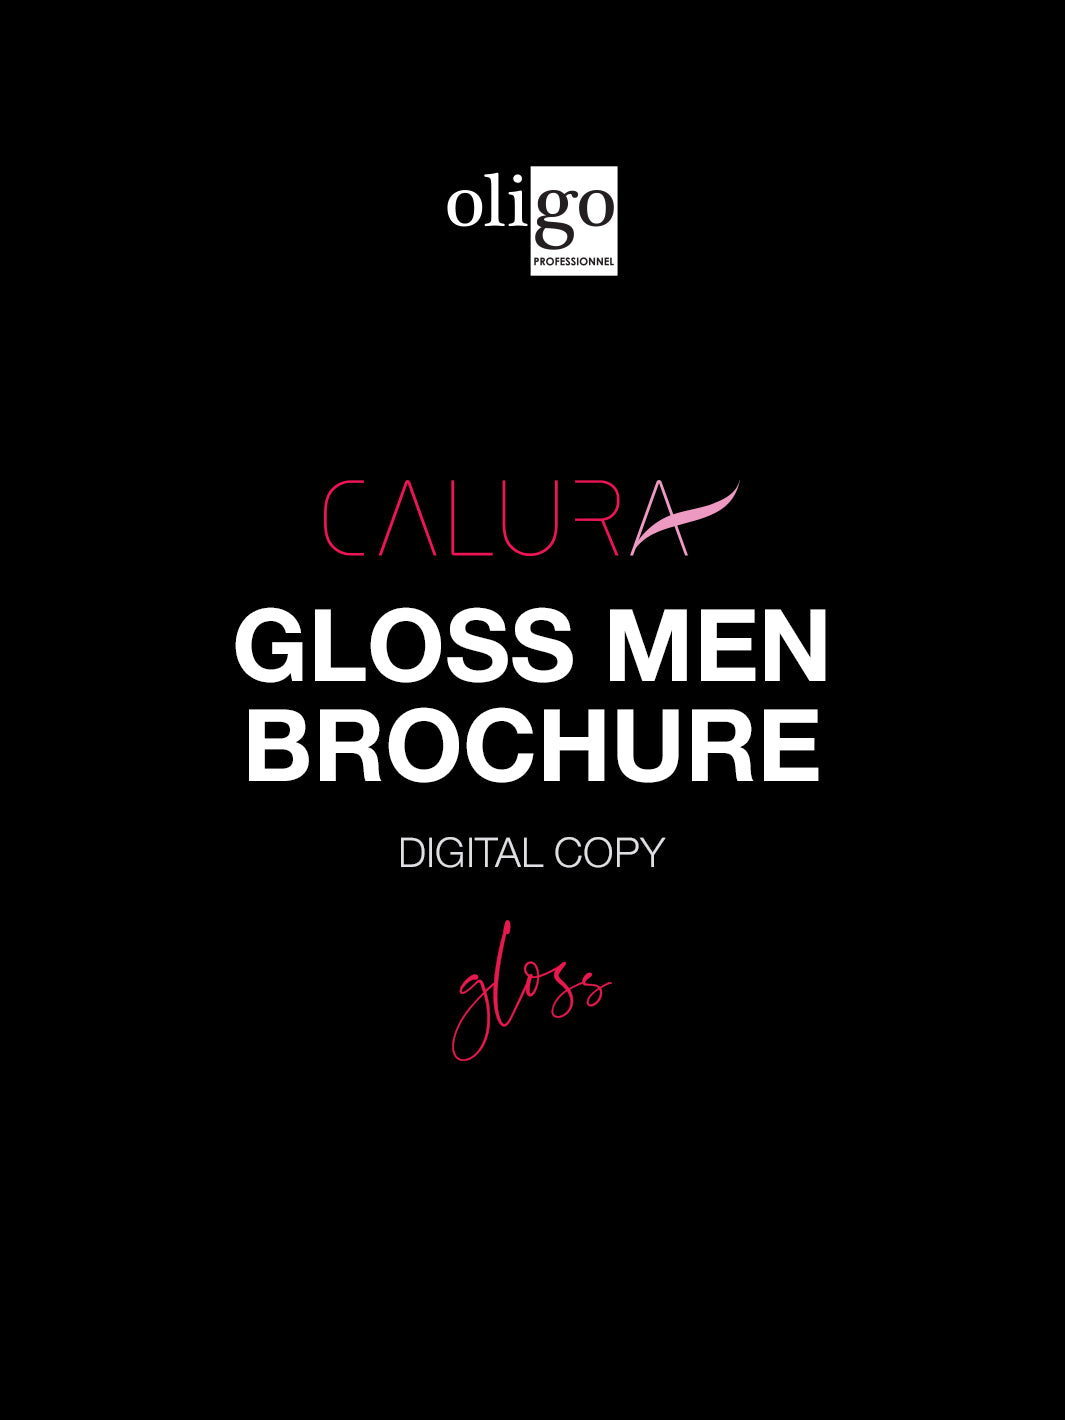 Oligo Calura Gloss Men Brochure  (digital copy)